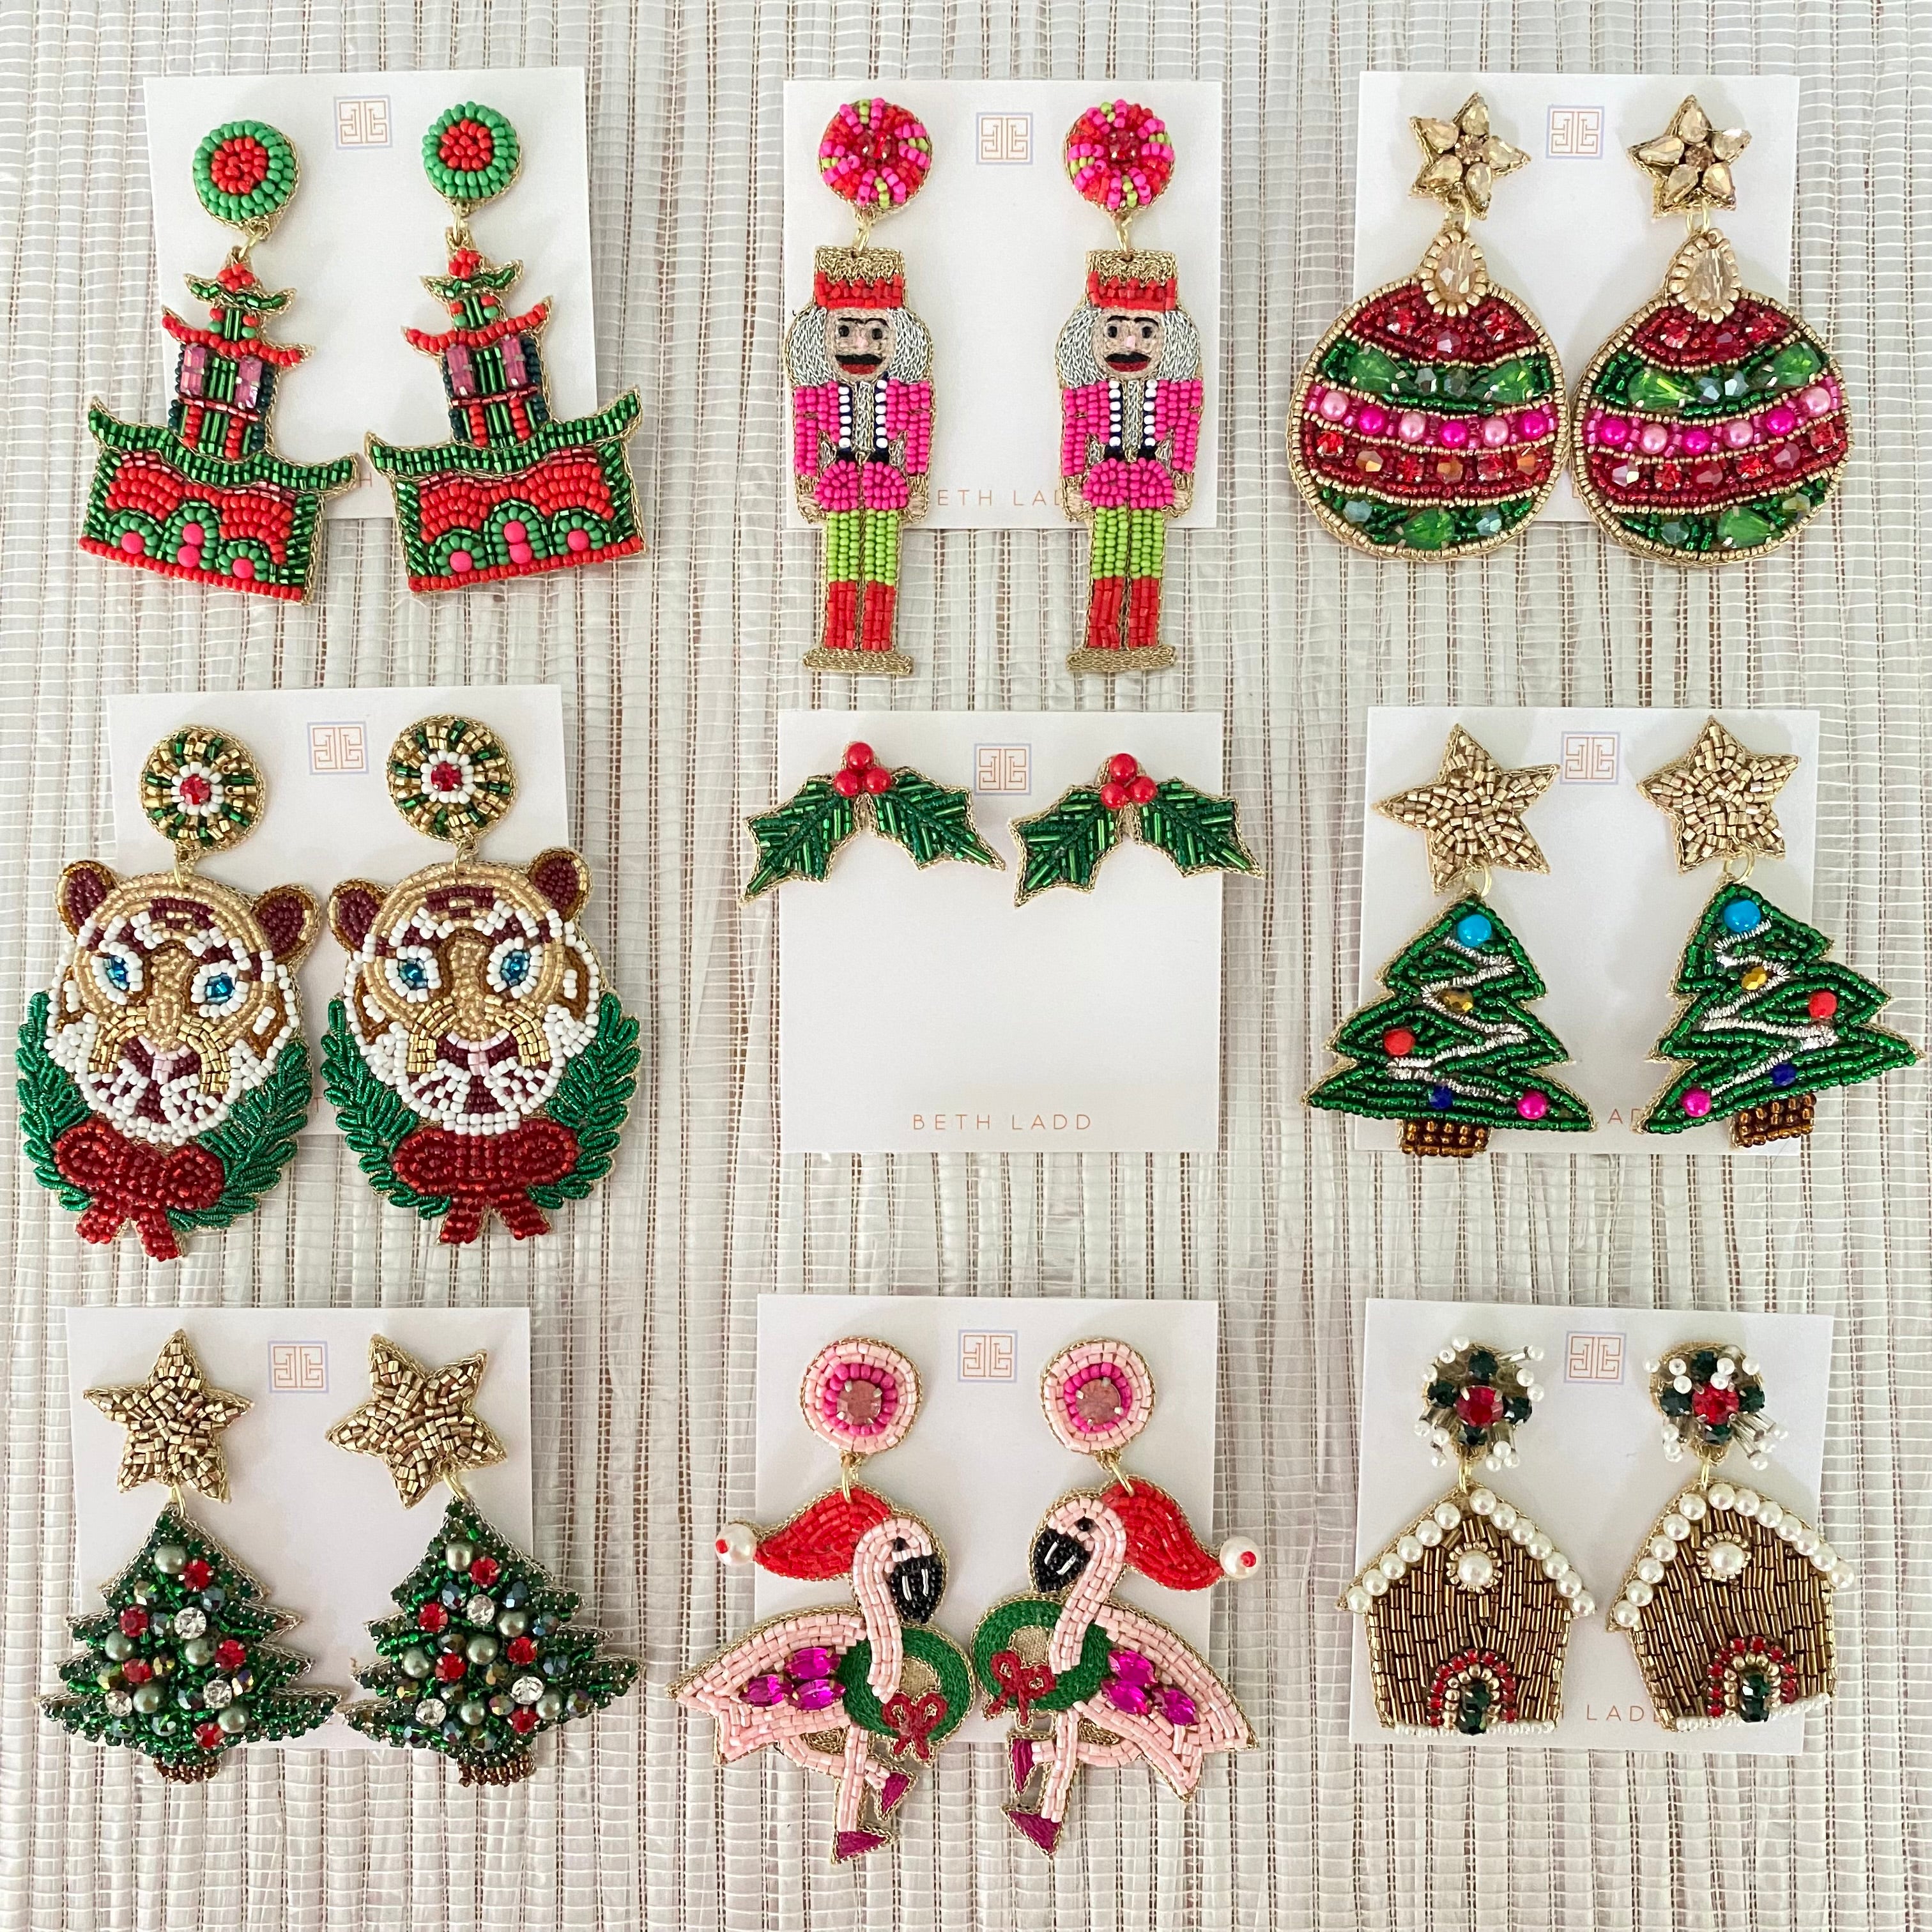 Festive Pagoda Earrings